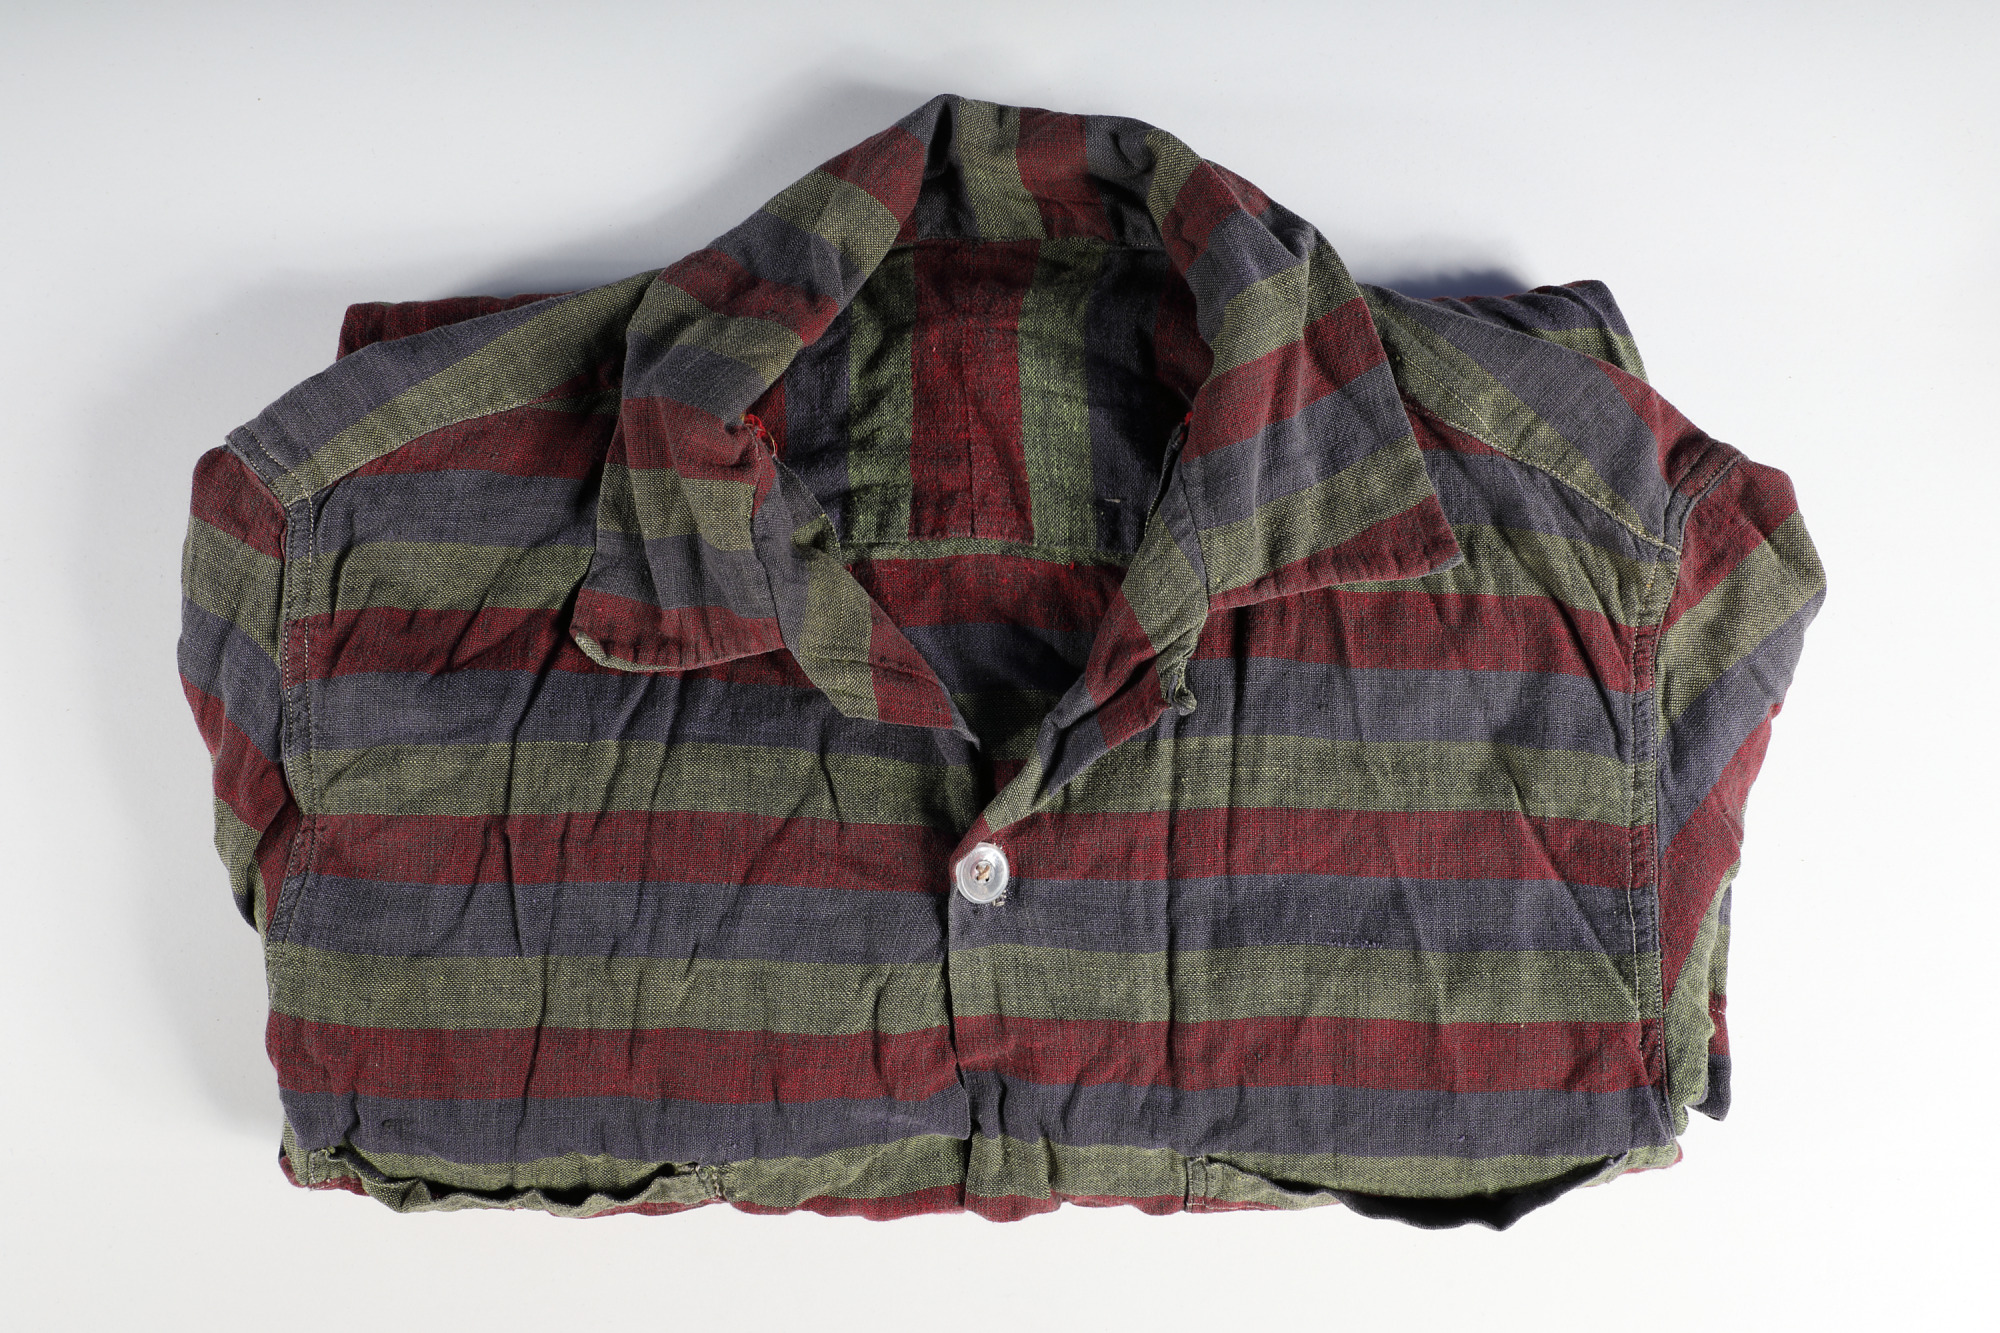 a neatly folded striped shirt